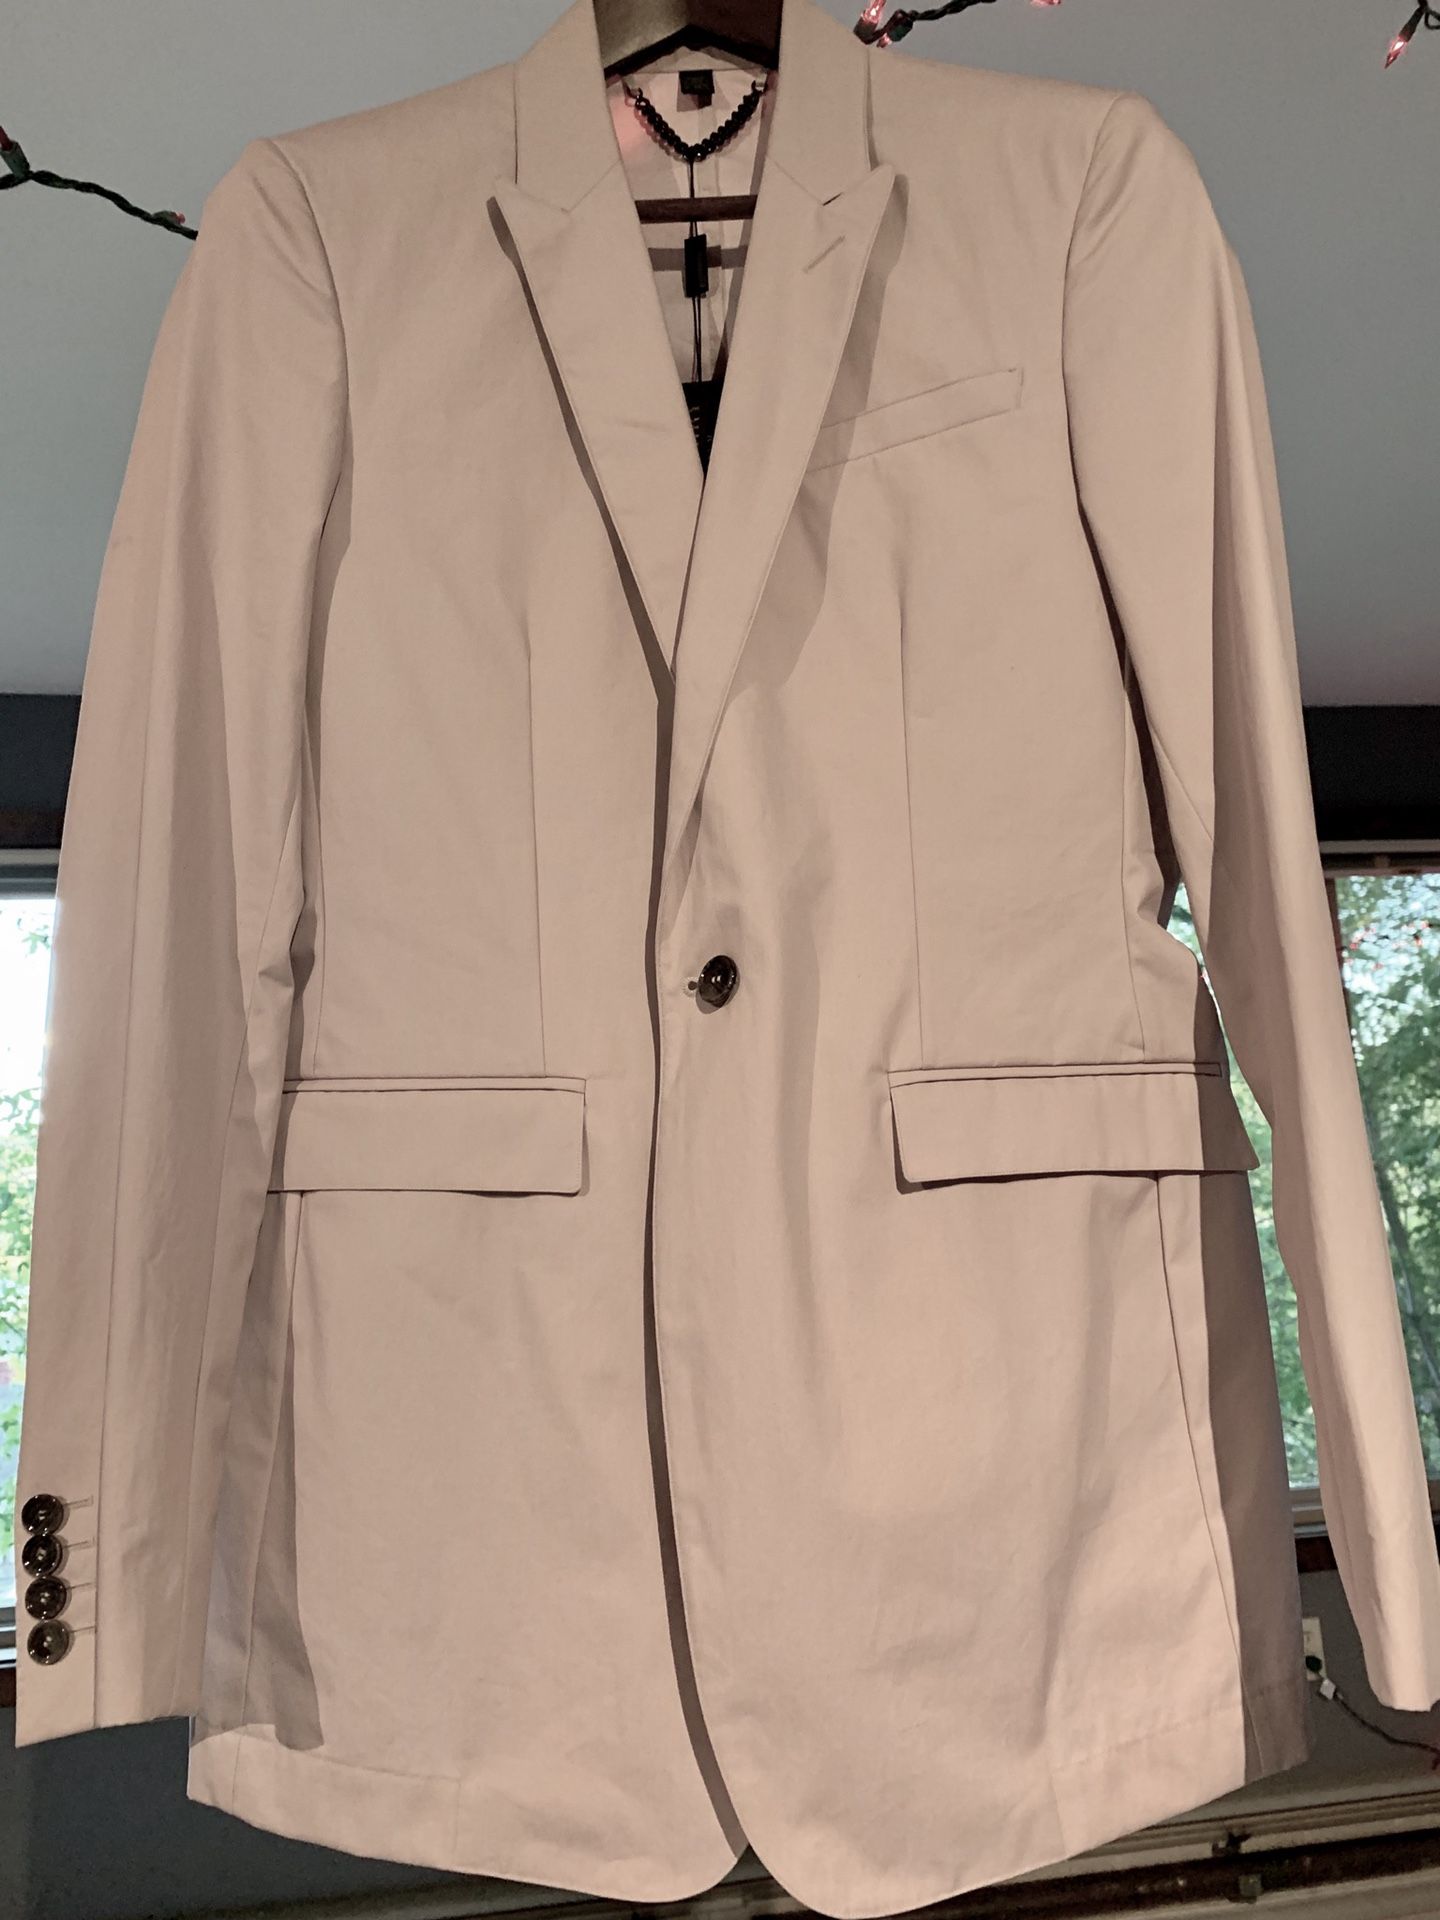 NEW Burberry Prorsum Jacket / Blazer / Coat - Men or Women